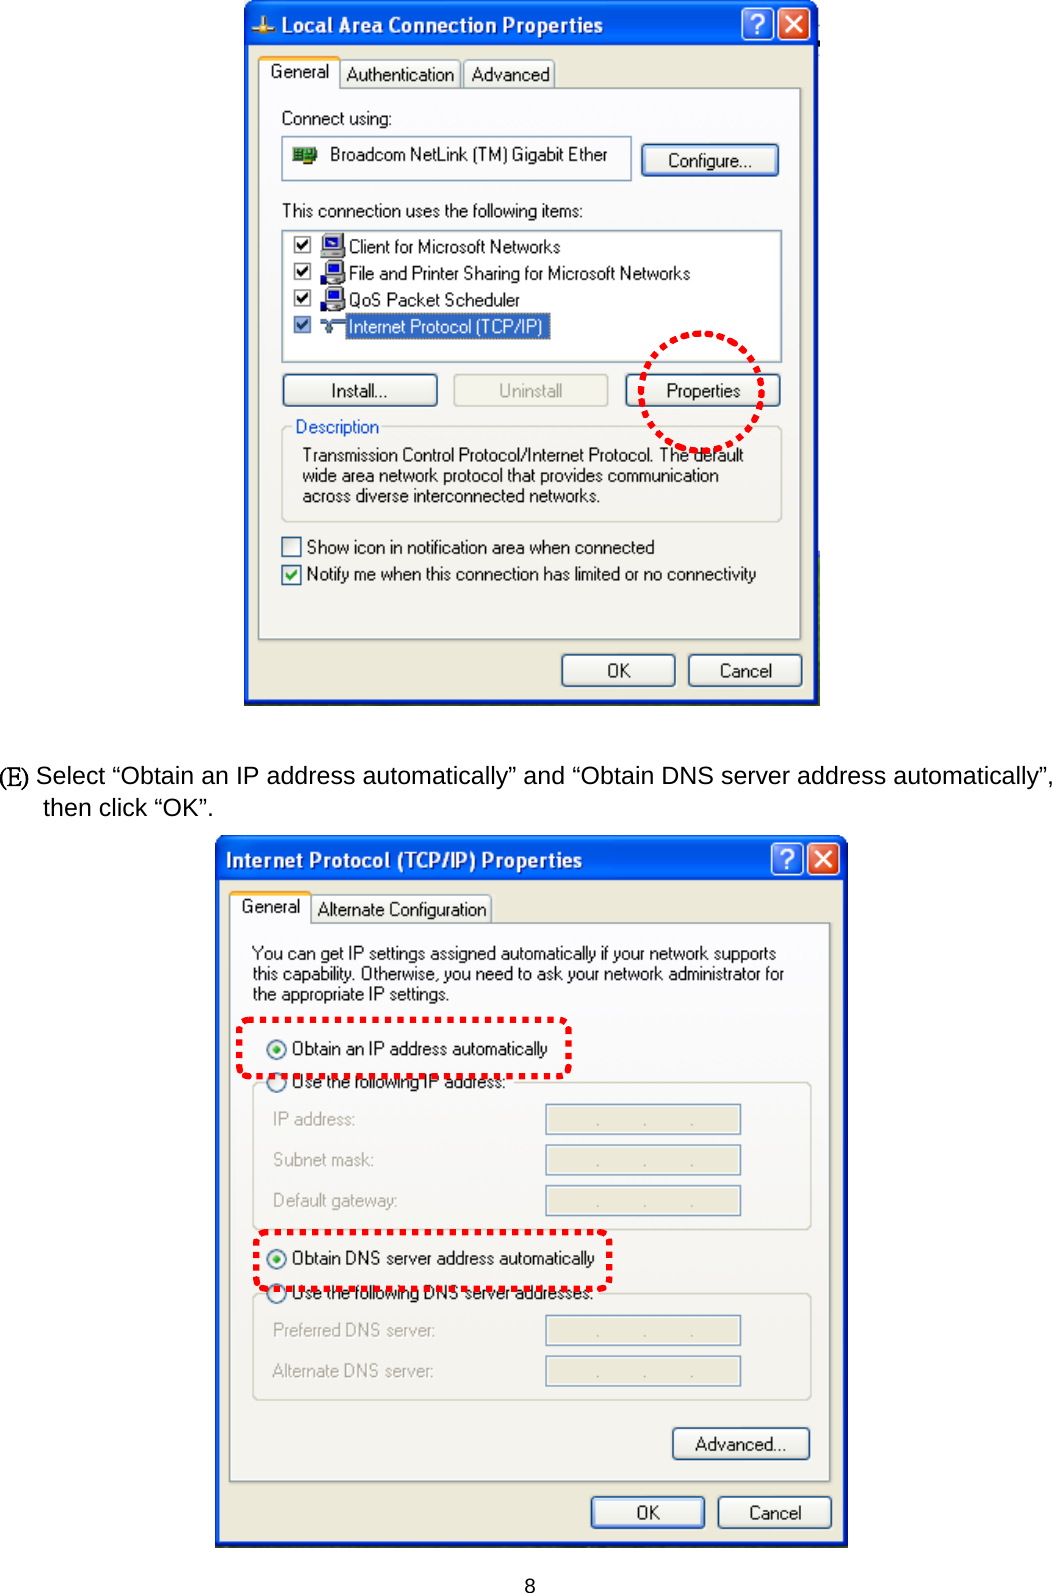 8    (E) Select “Obtain an IP address automatically” and “Obtain DNS server address automatically”, then click “OK”. 